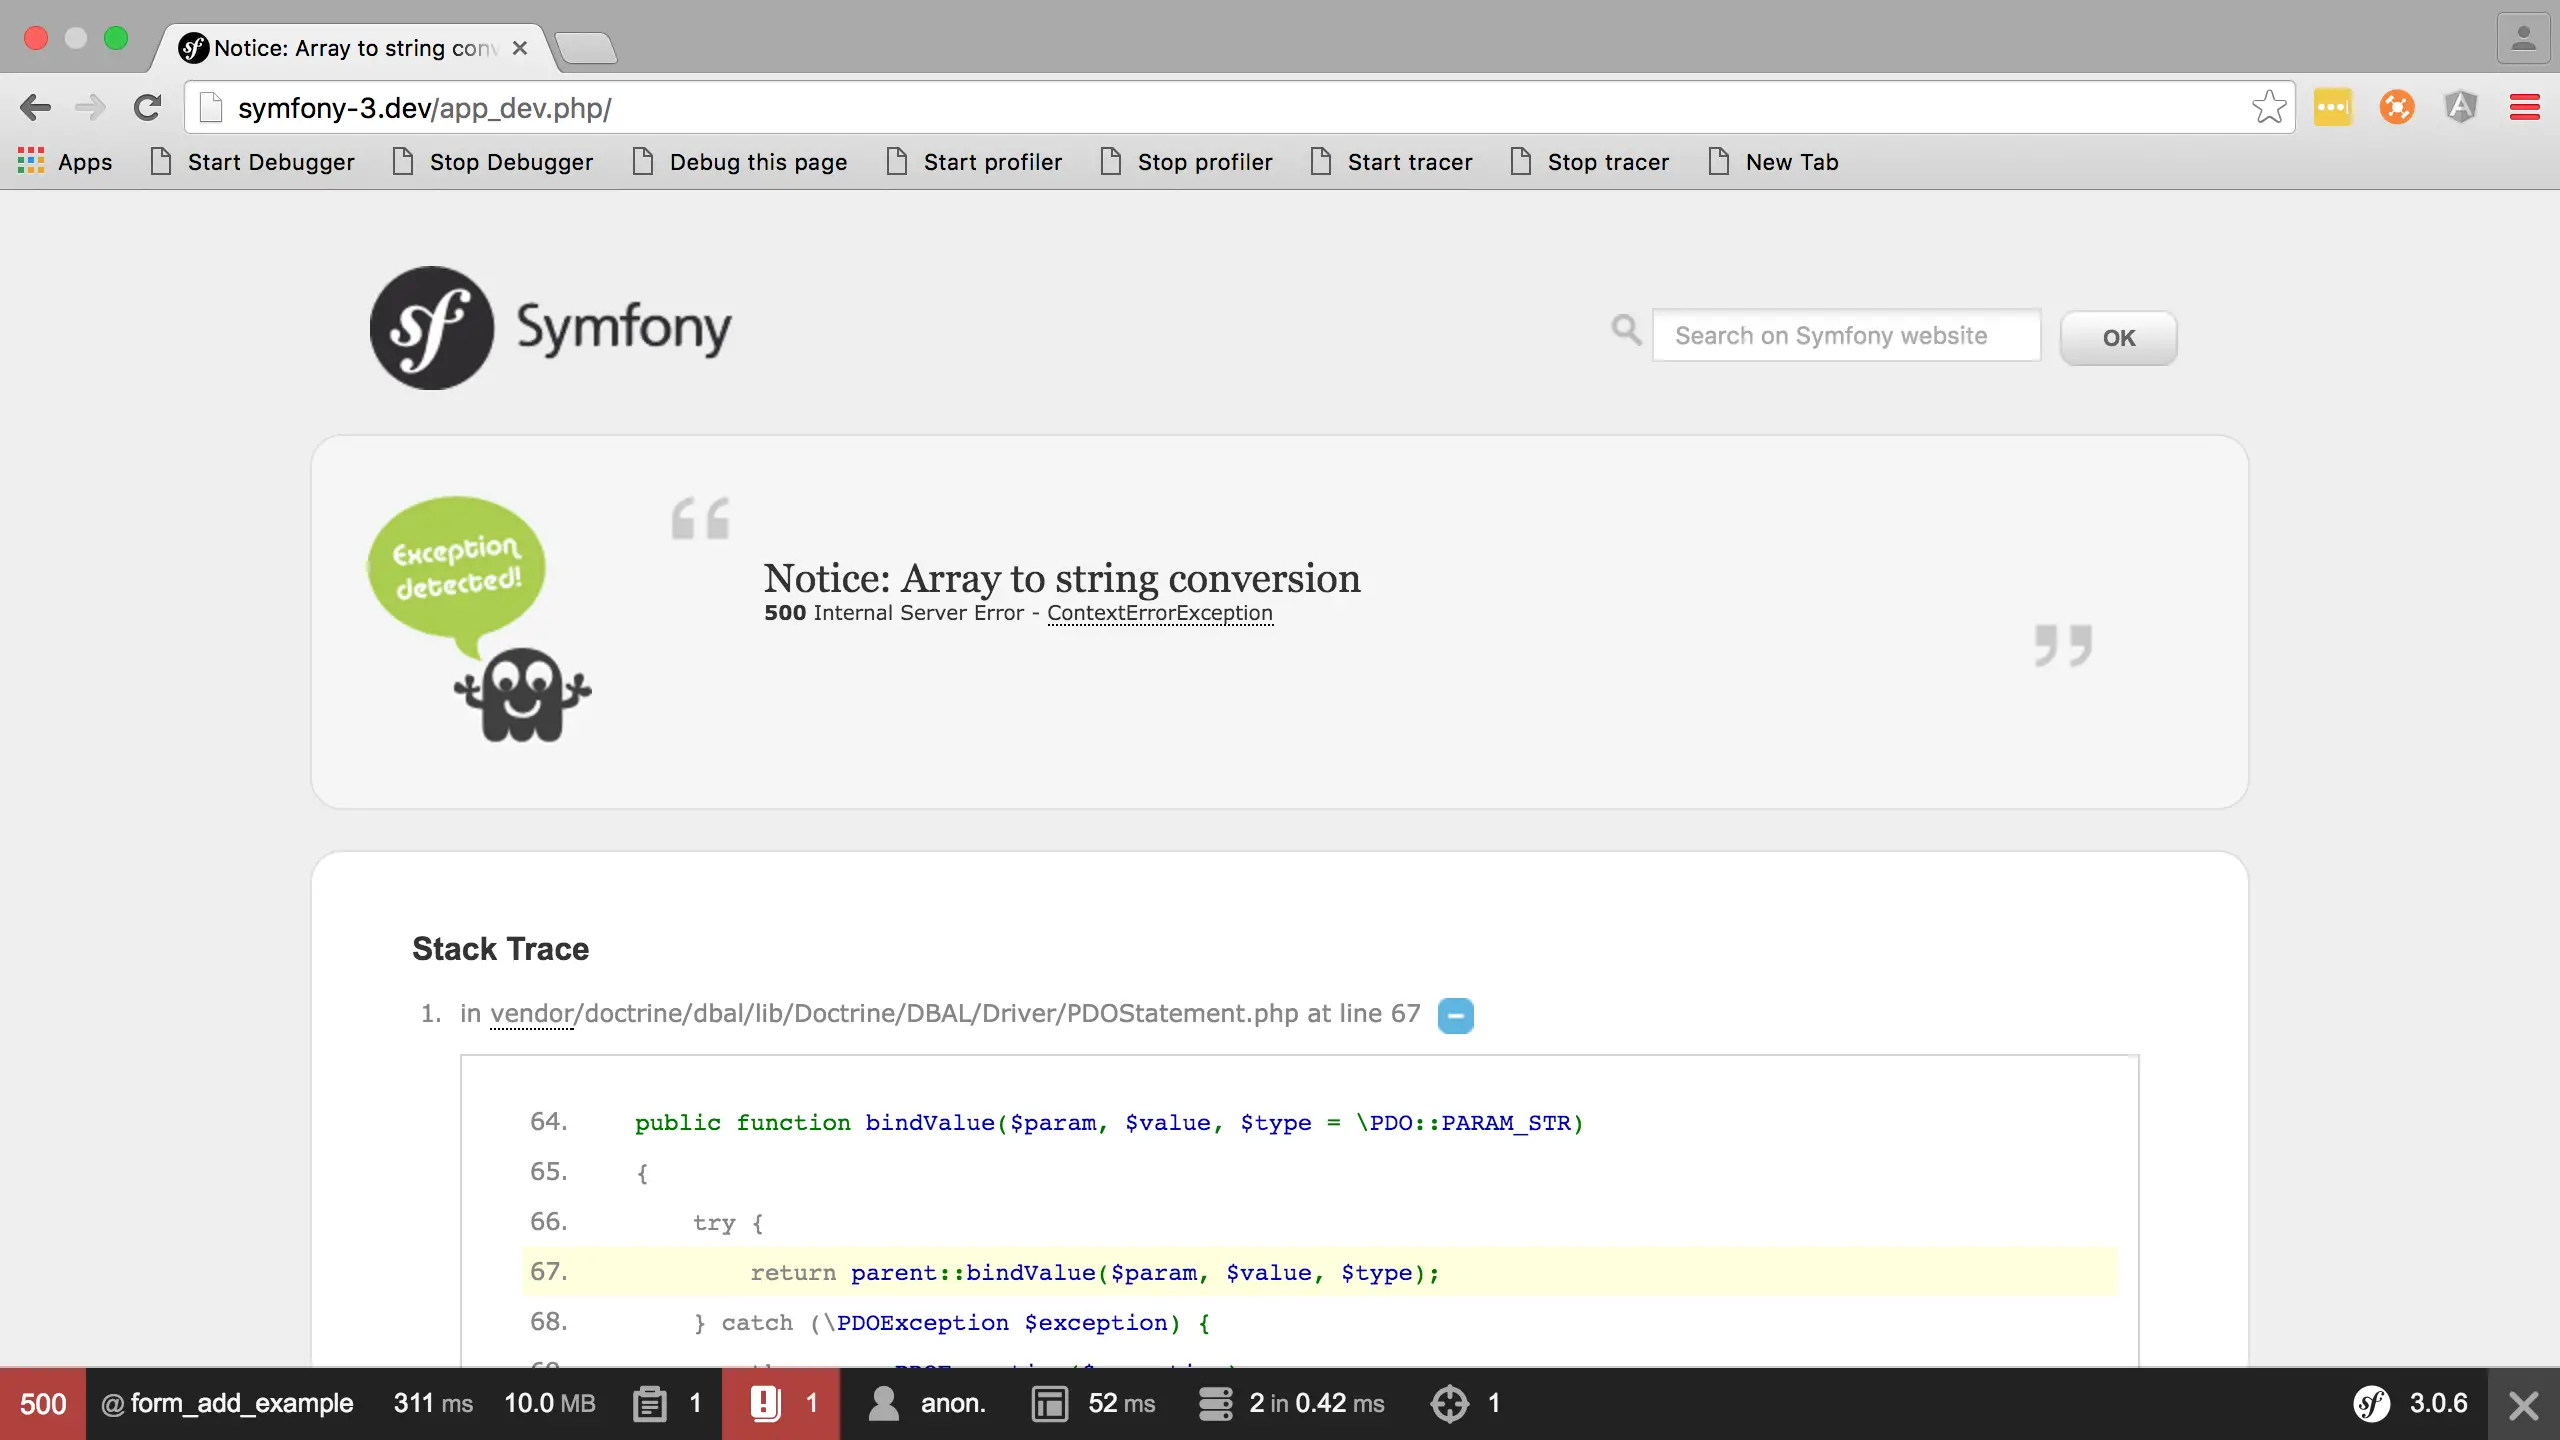 Symfony - Notice: Array to string conversion, 500 Internal Server Error ContextErrorException